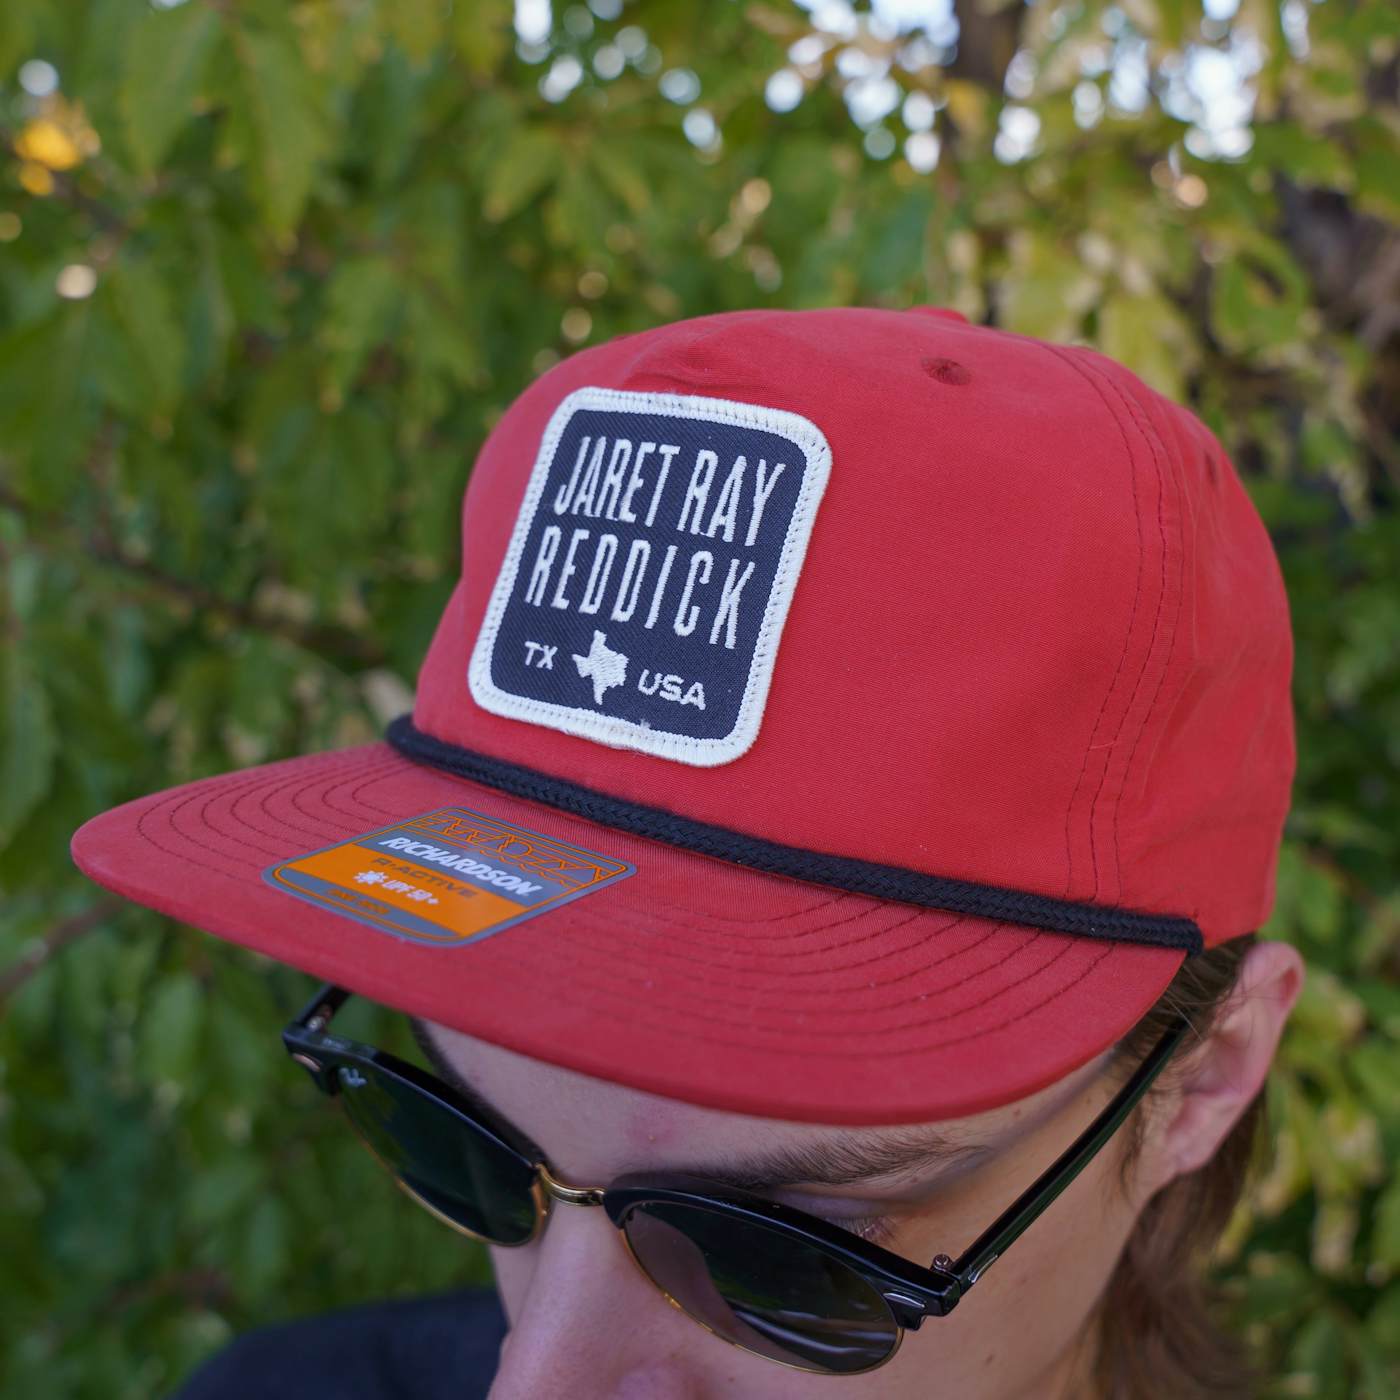 Jaret Reddick Jaret Ray Reddick - Red TX Logo Hat